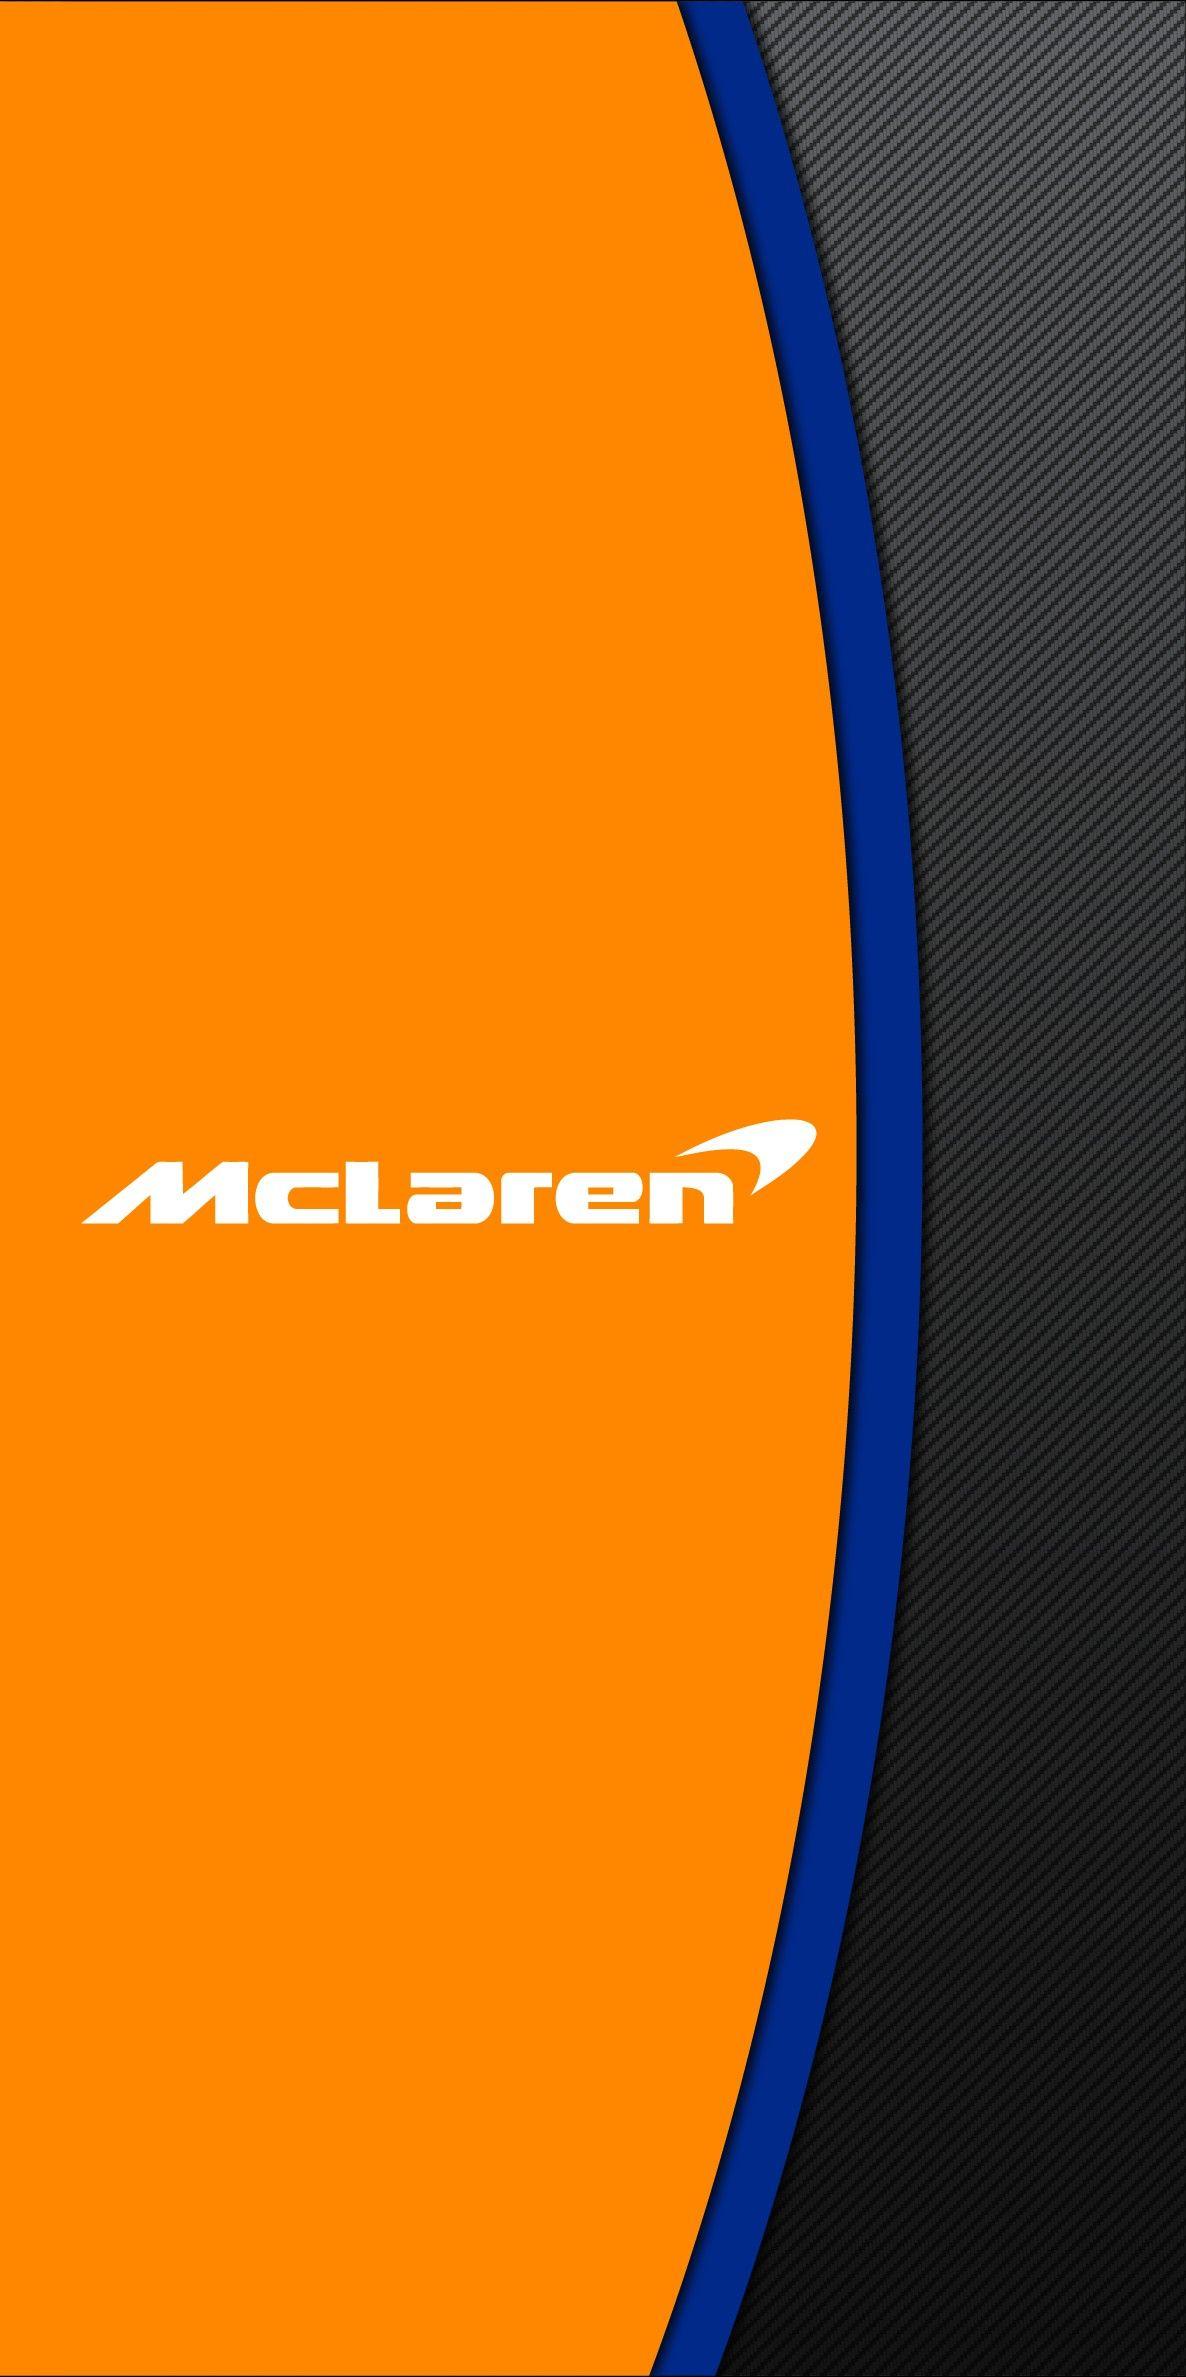 McLaren Formula 1 Wallpapers - Top Free McLaren Formula 1 ...